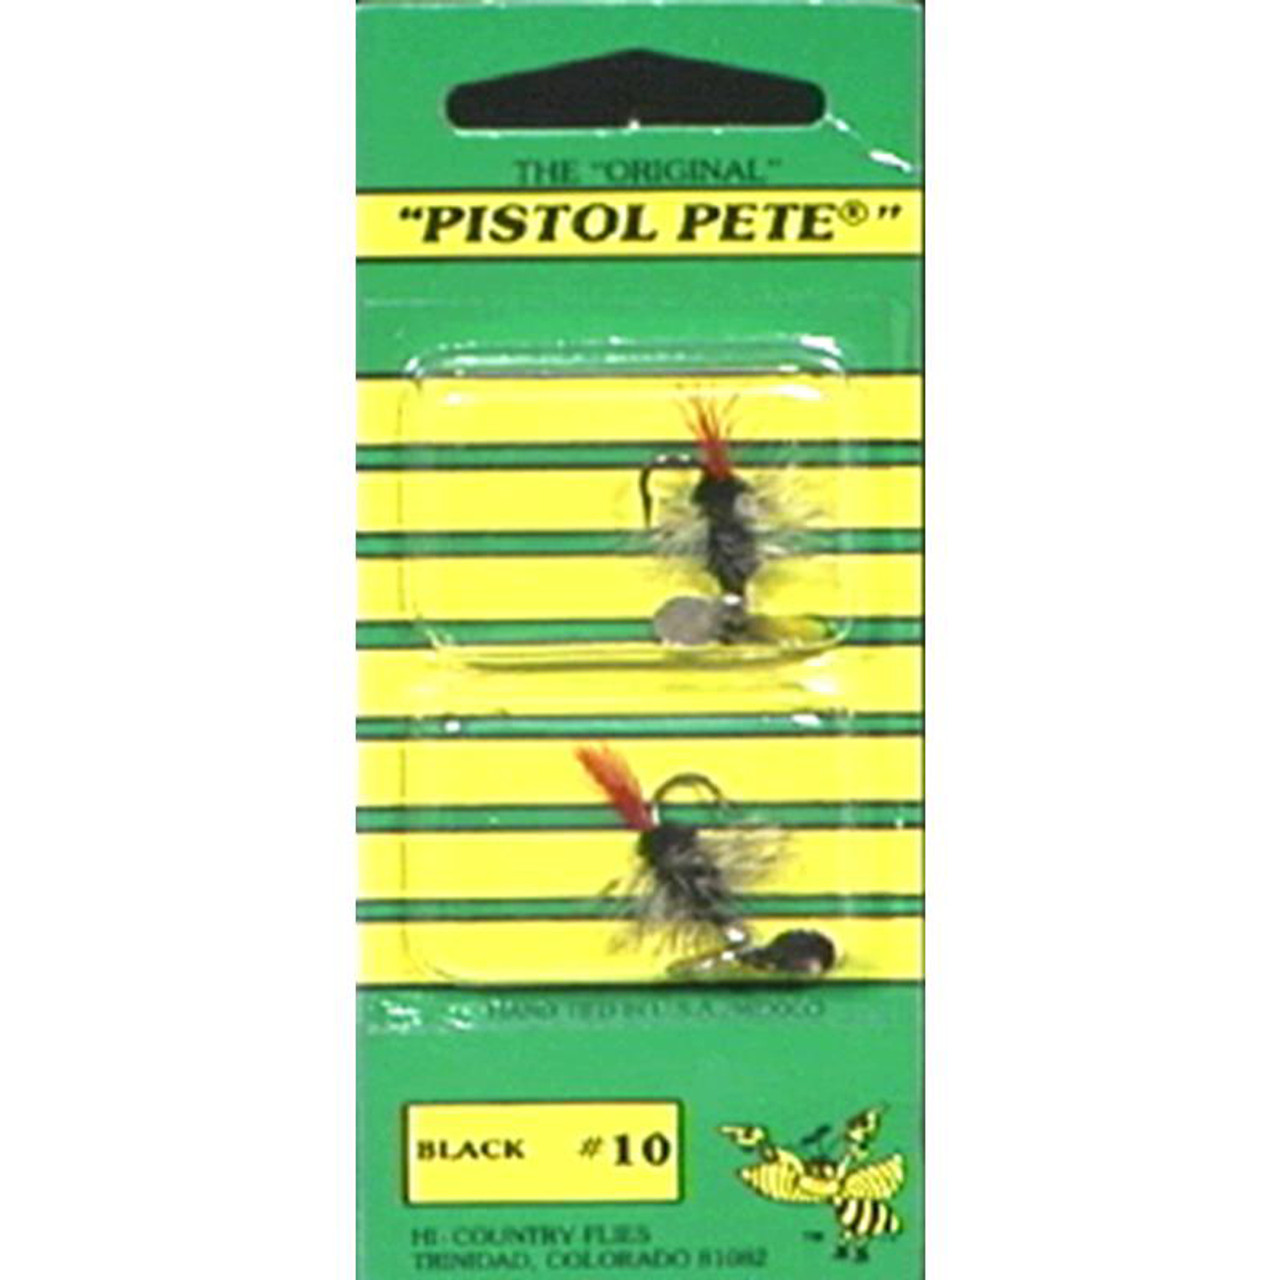 Pistol Pete - Hi-Country Flies Pistol Pete Size 10 - Black